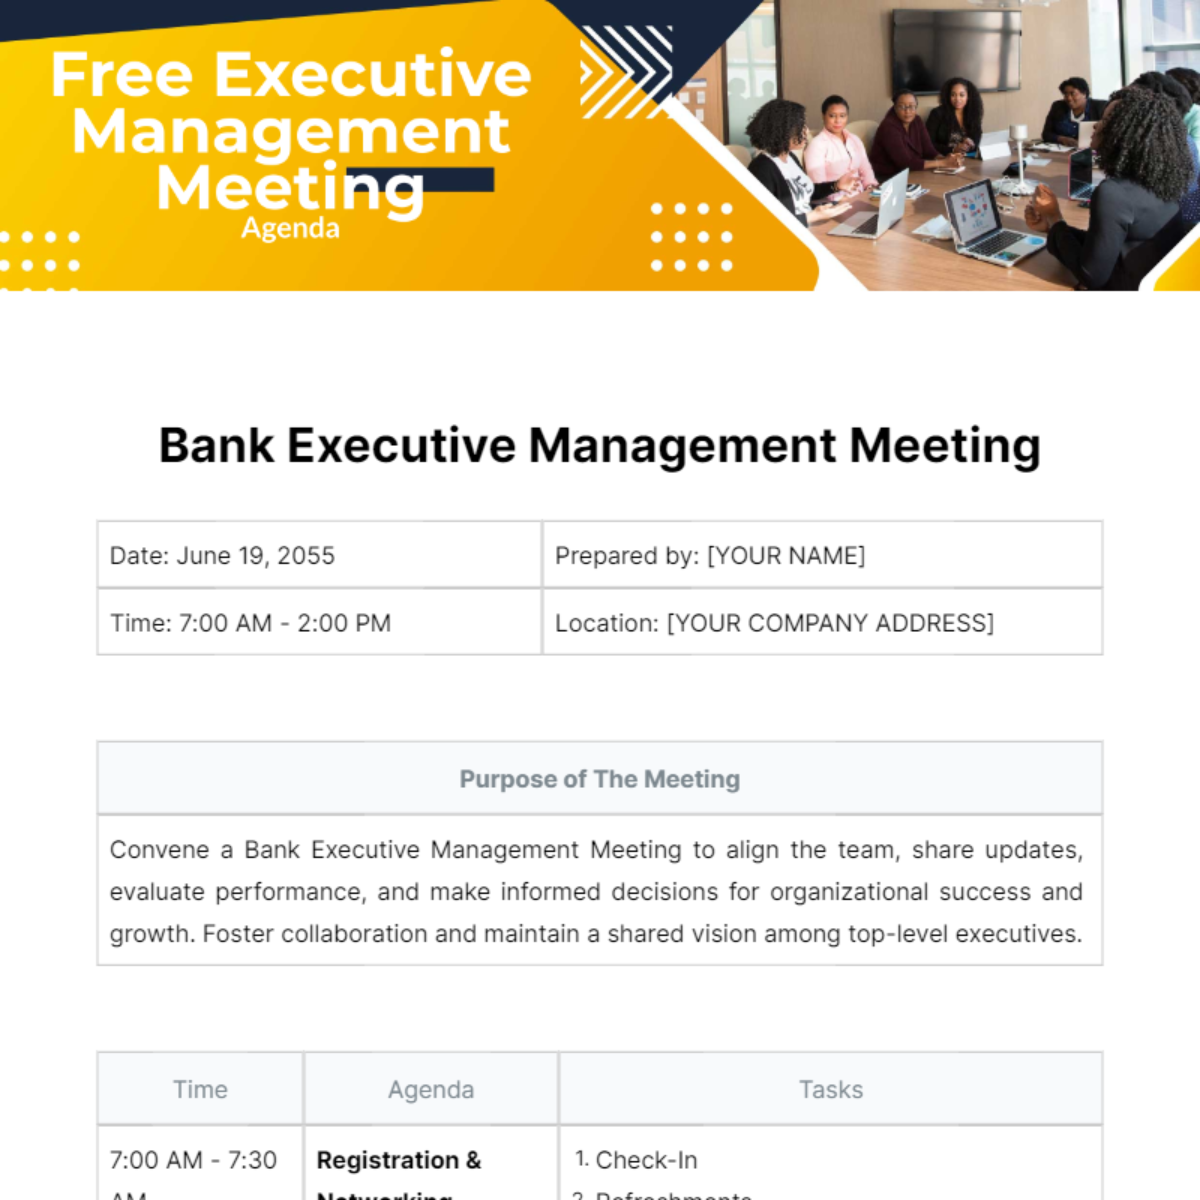 Free Executive Management Meeting Agenda Template